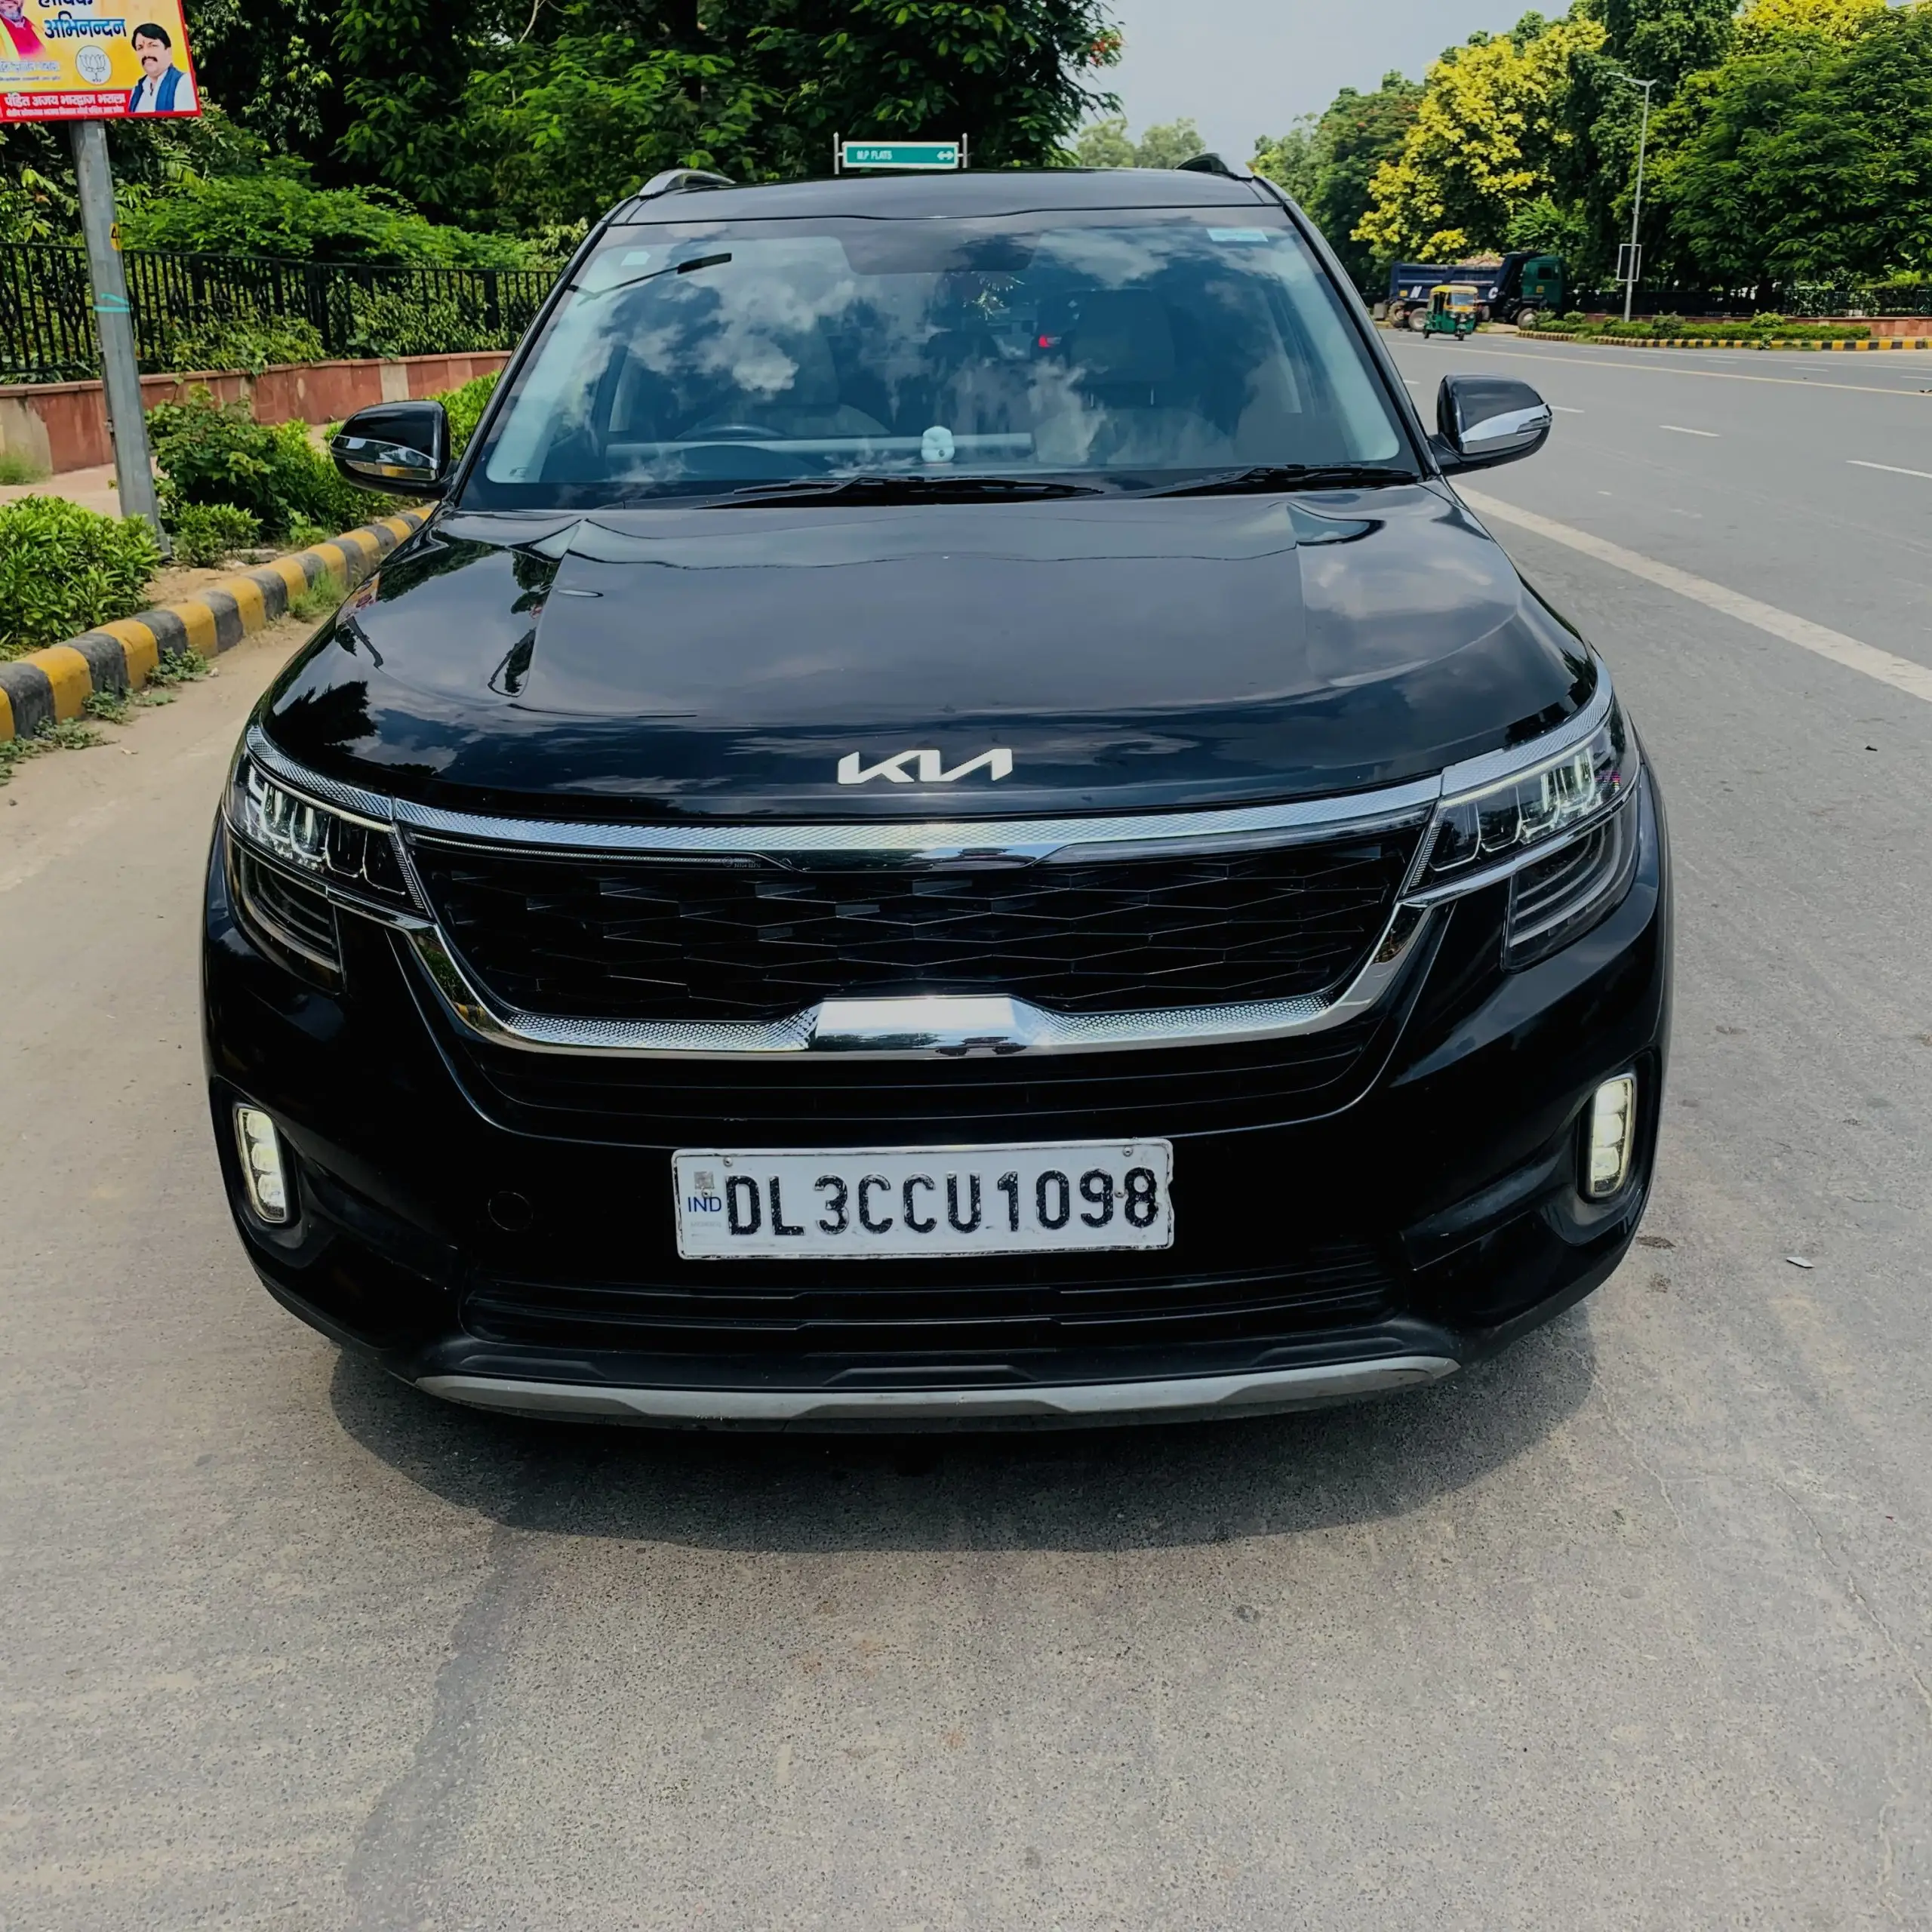 Self drive car in delhi - seltos